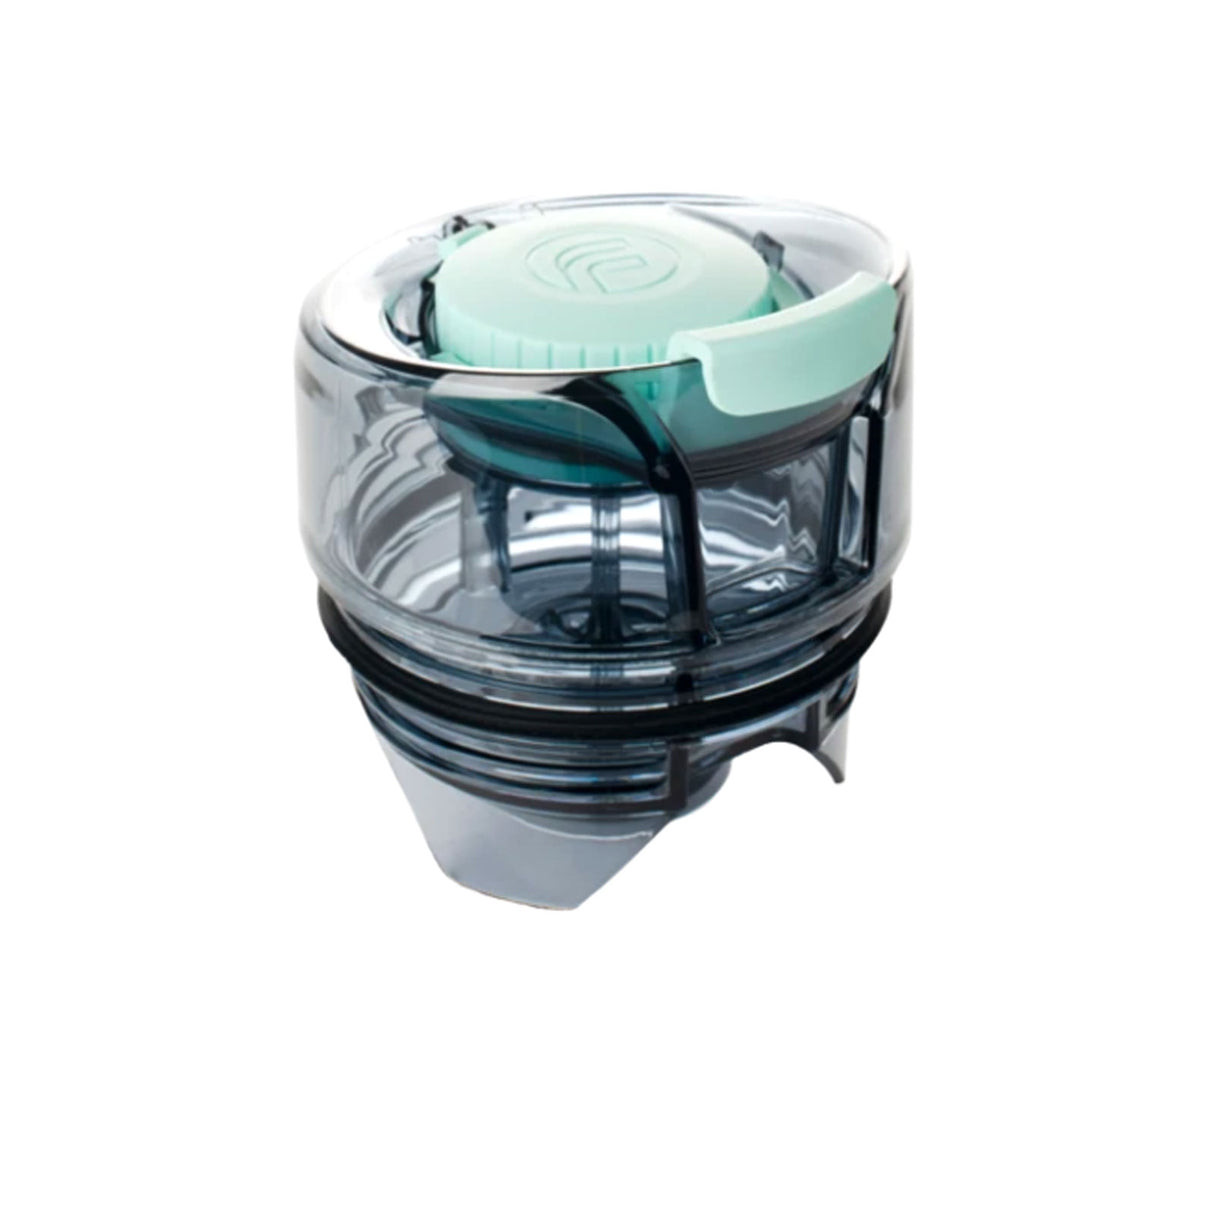 FlasKap Madic 9 - Seafoam Green Accessories - Drinkware - The Heel Shoe Fitters